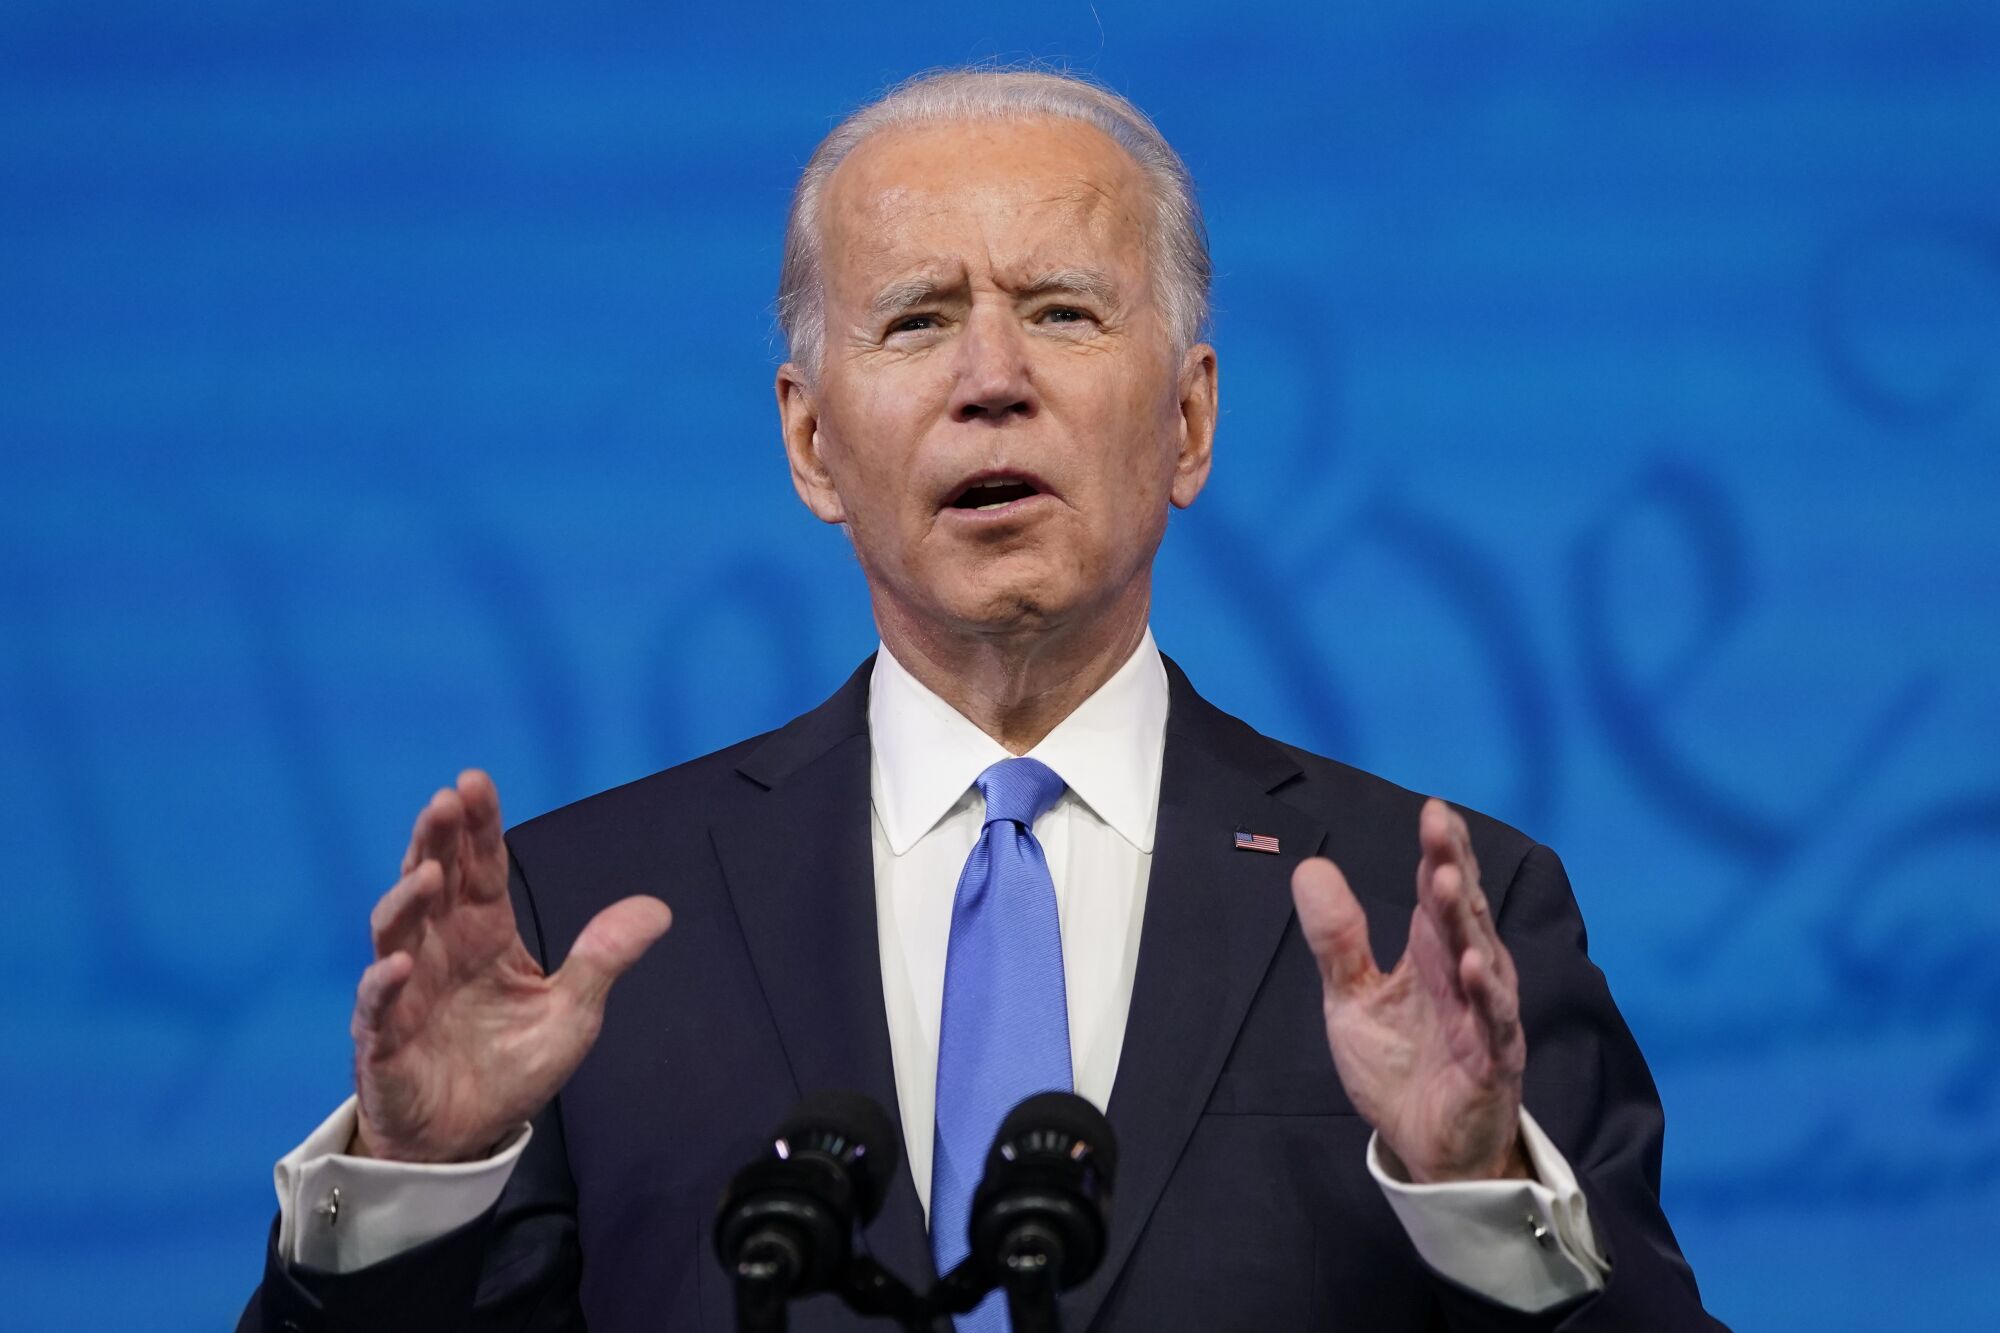 President-elect Joe Biden speaks with a blue background behind him